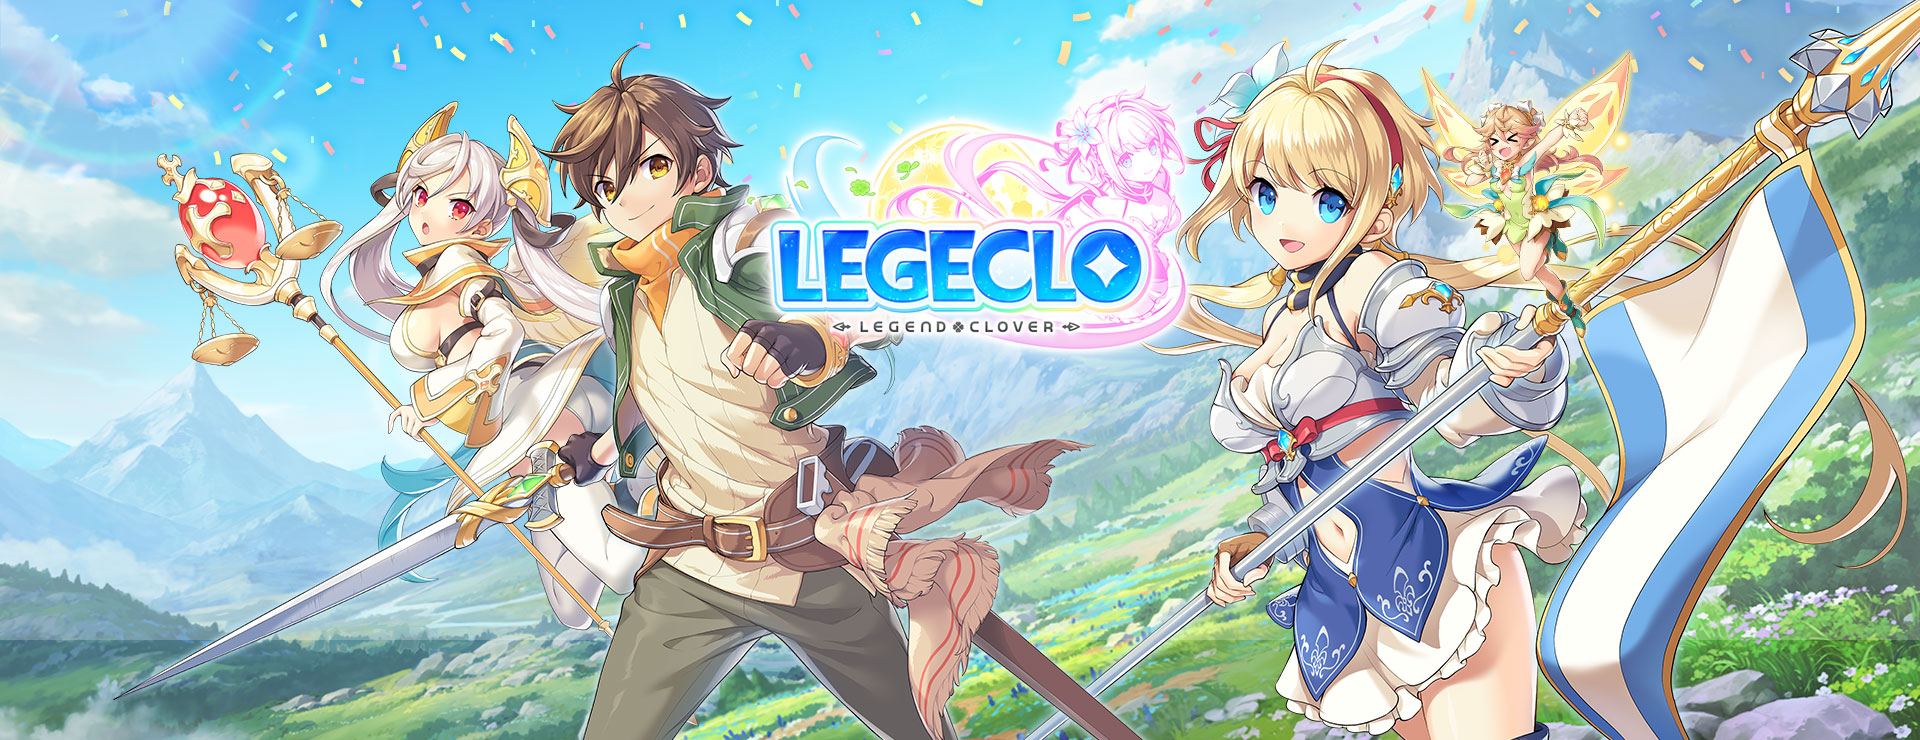 Legeclo: Legend Clover - 回合制角色扮演游戏 遊戲